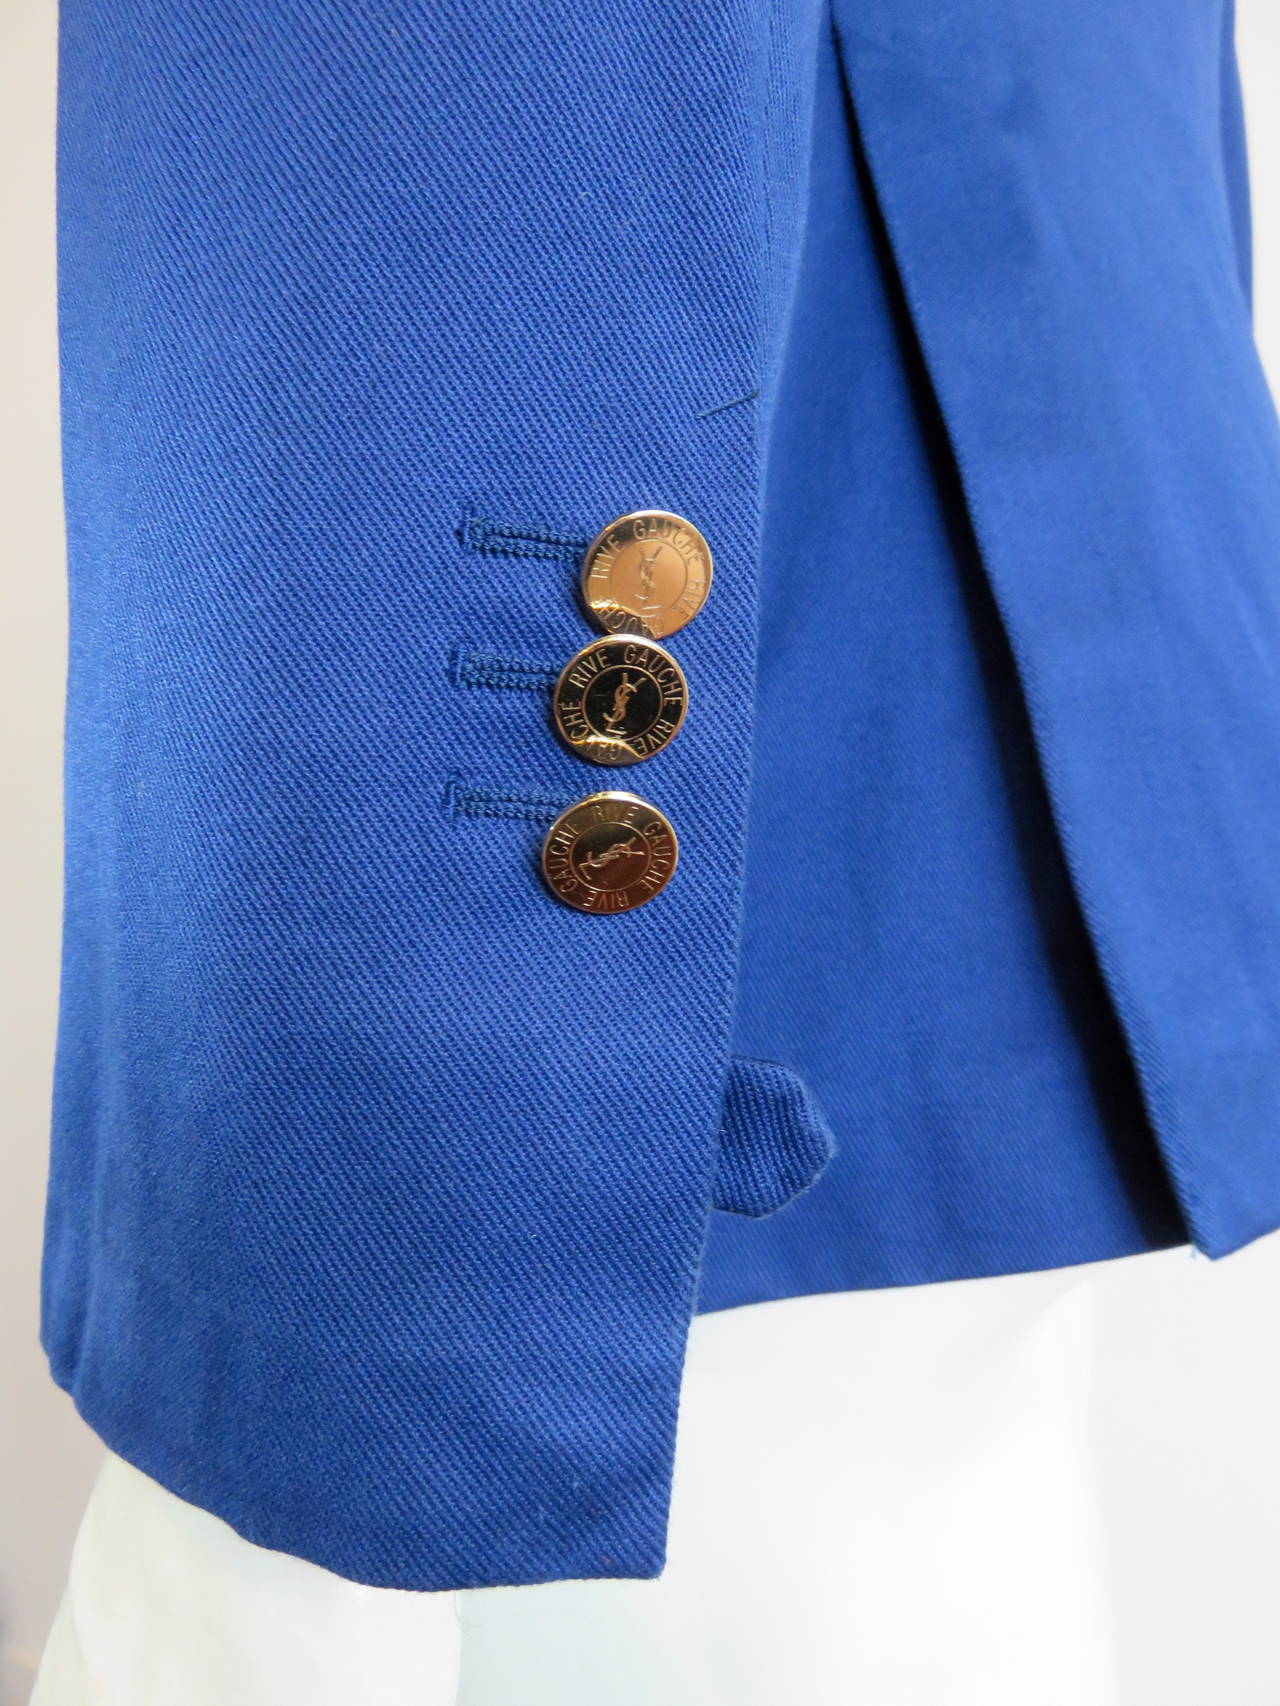 YVES SAINT LAURENT by Tom Ford Men's French blue twill blazer jacket 5